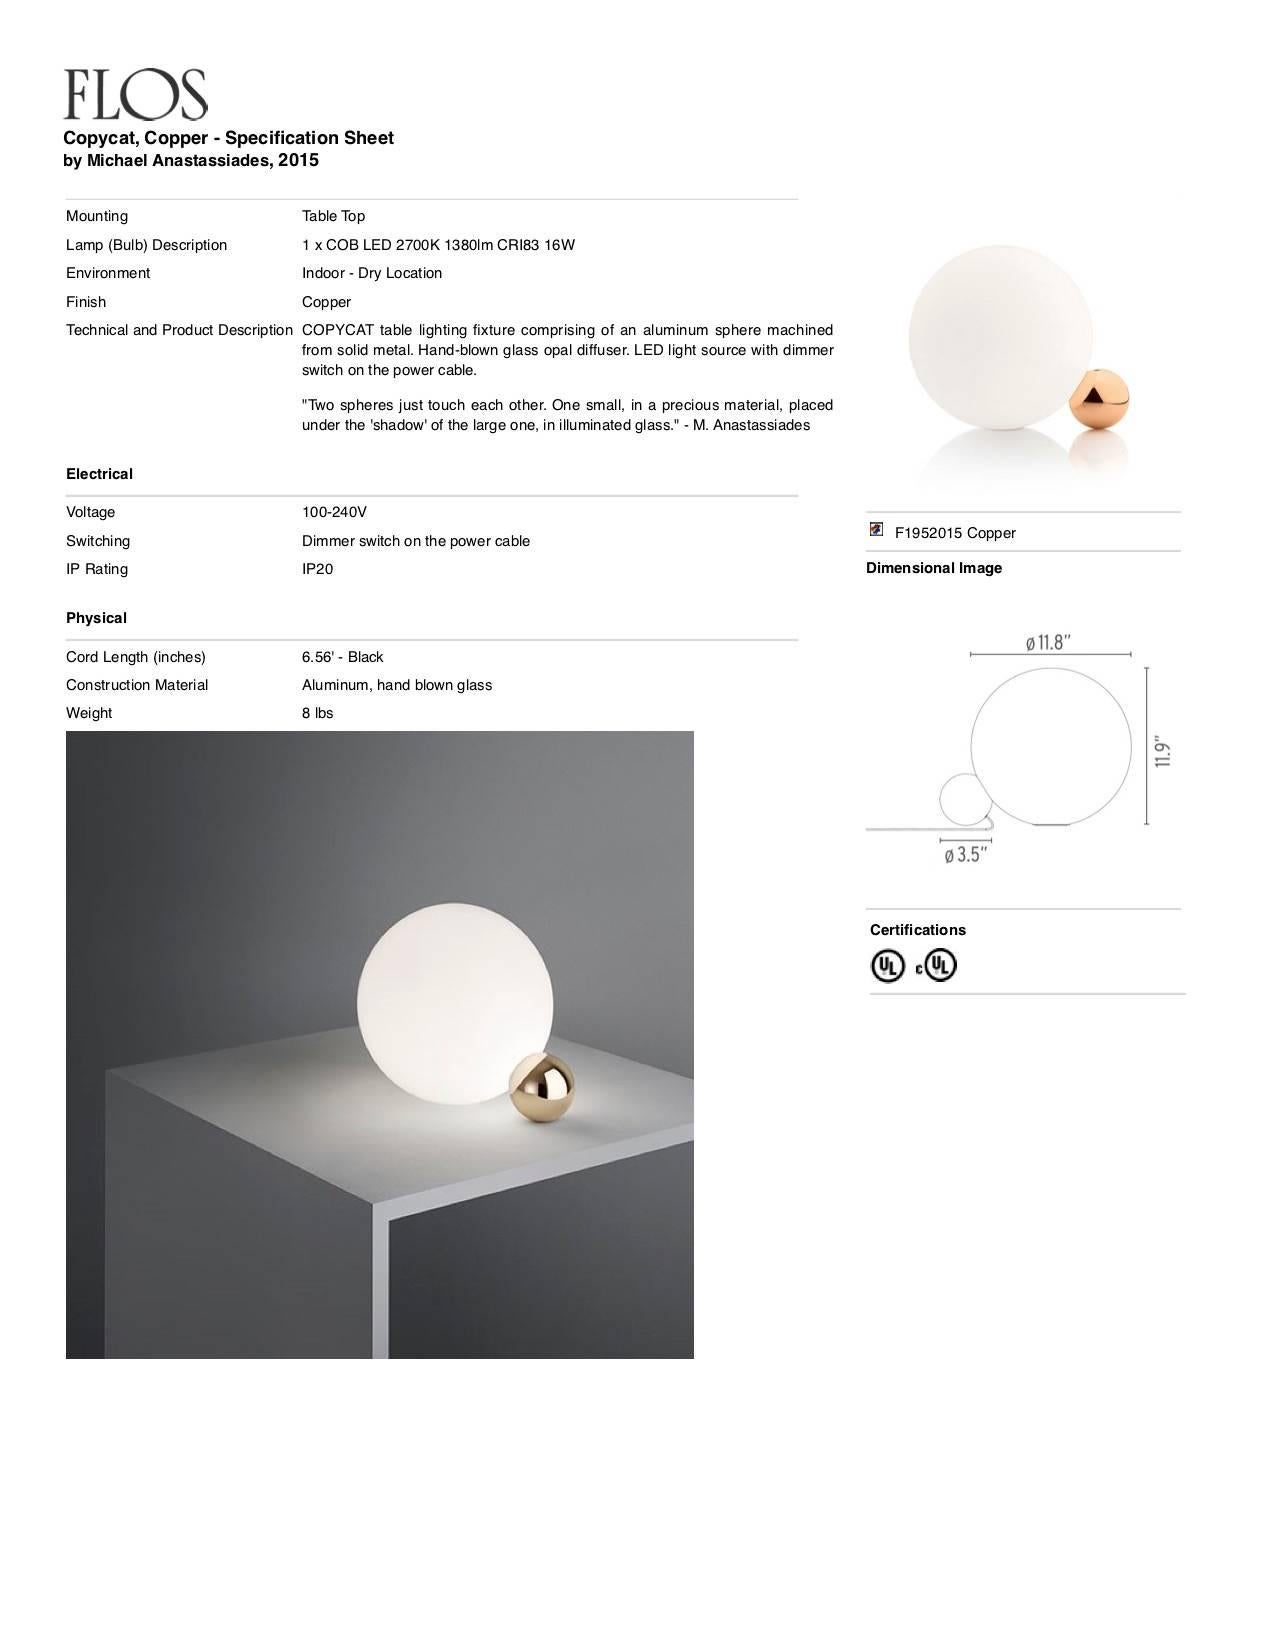 Italian FLOS Copycat Table Lamp in Copper by Michael Anastassiades